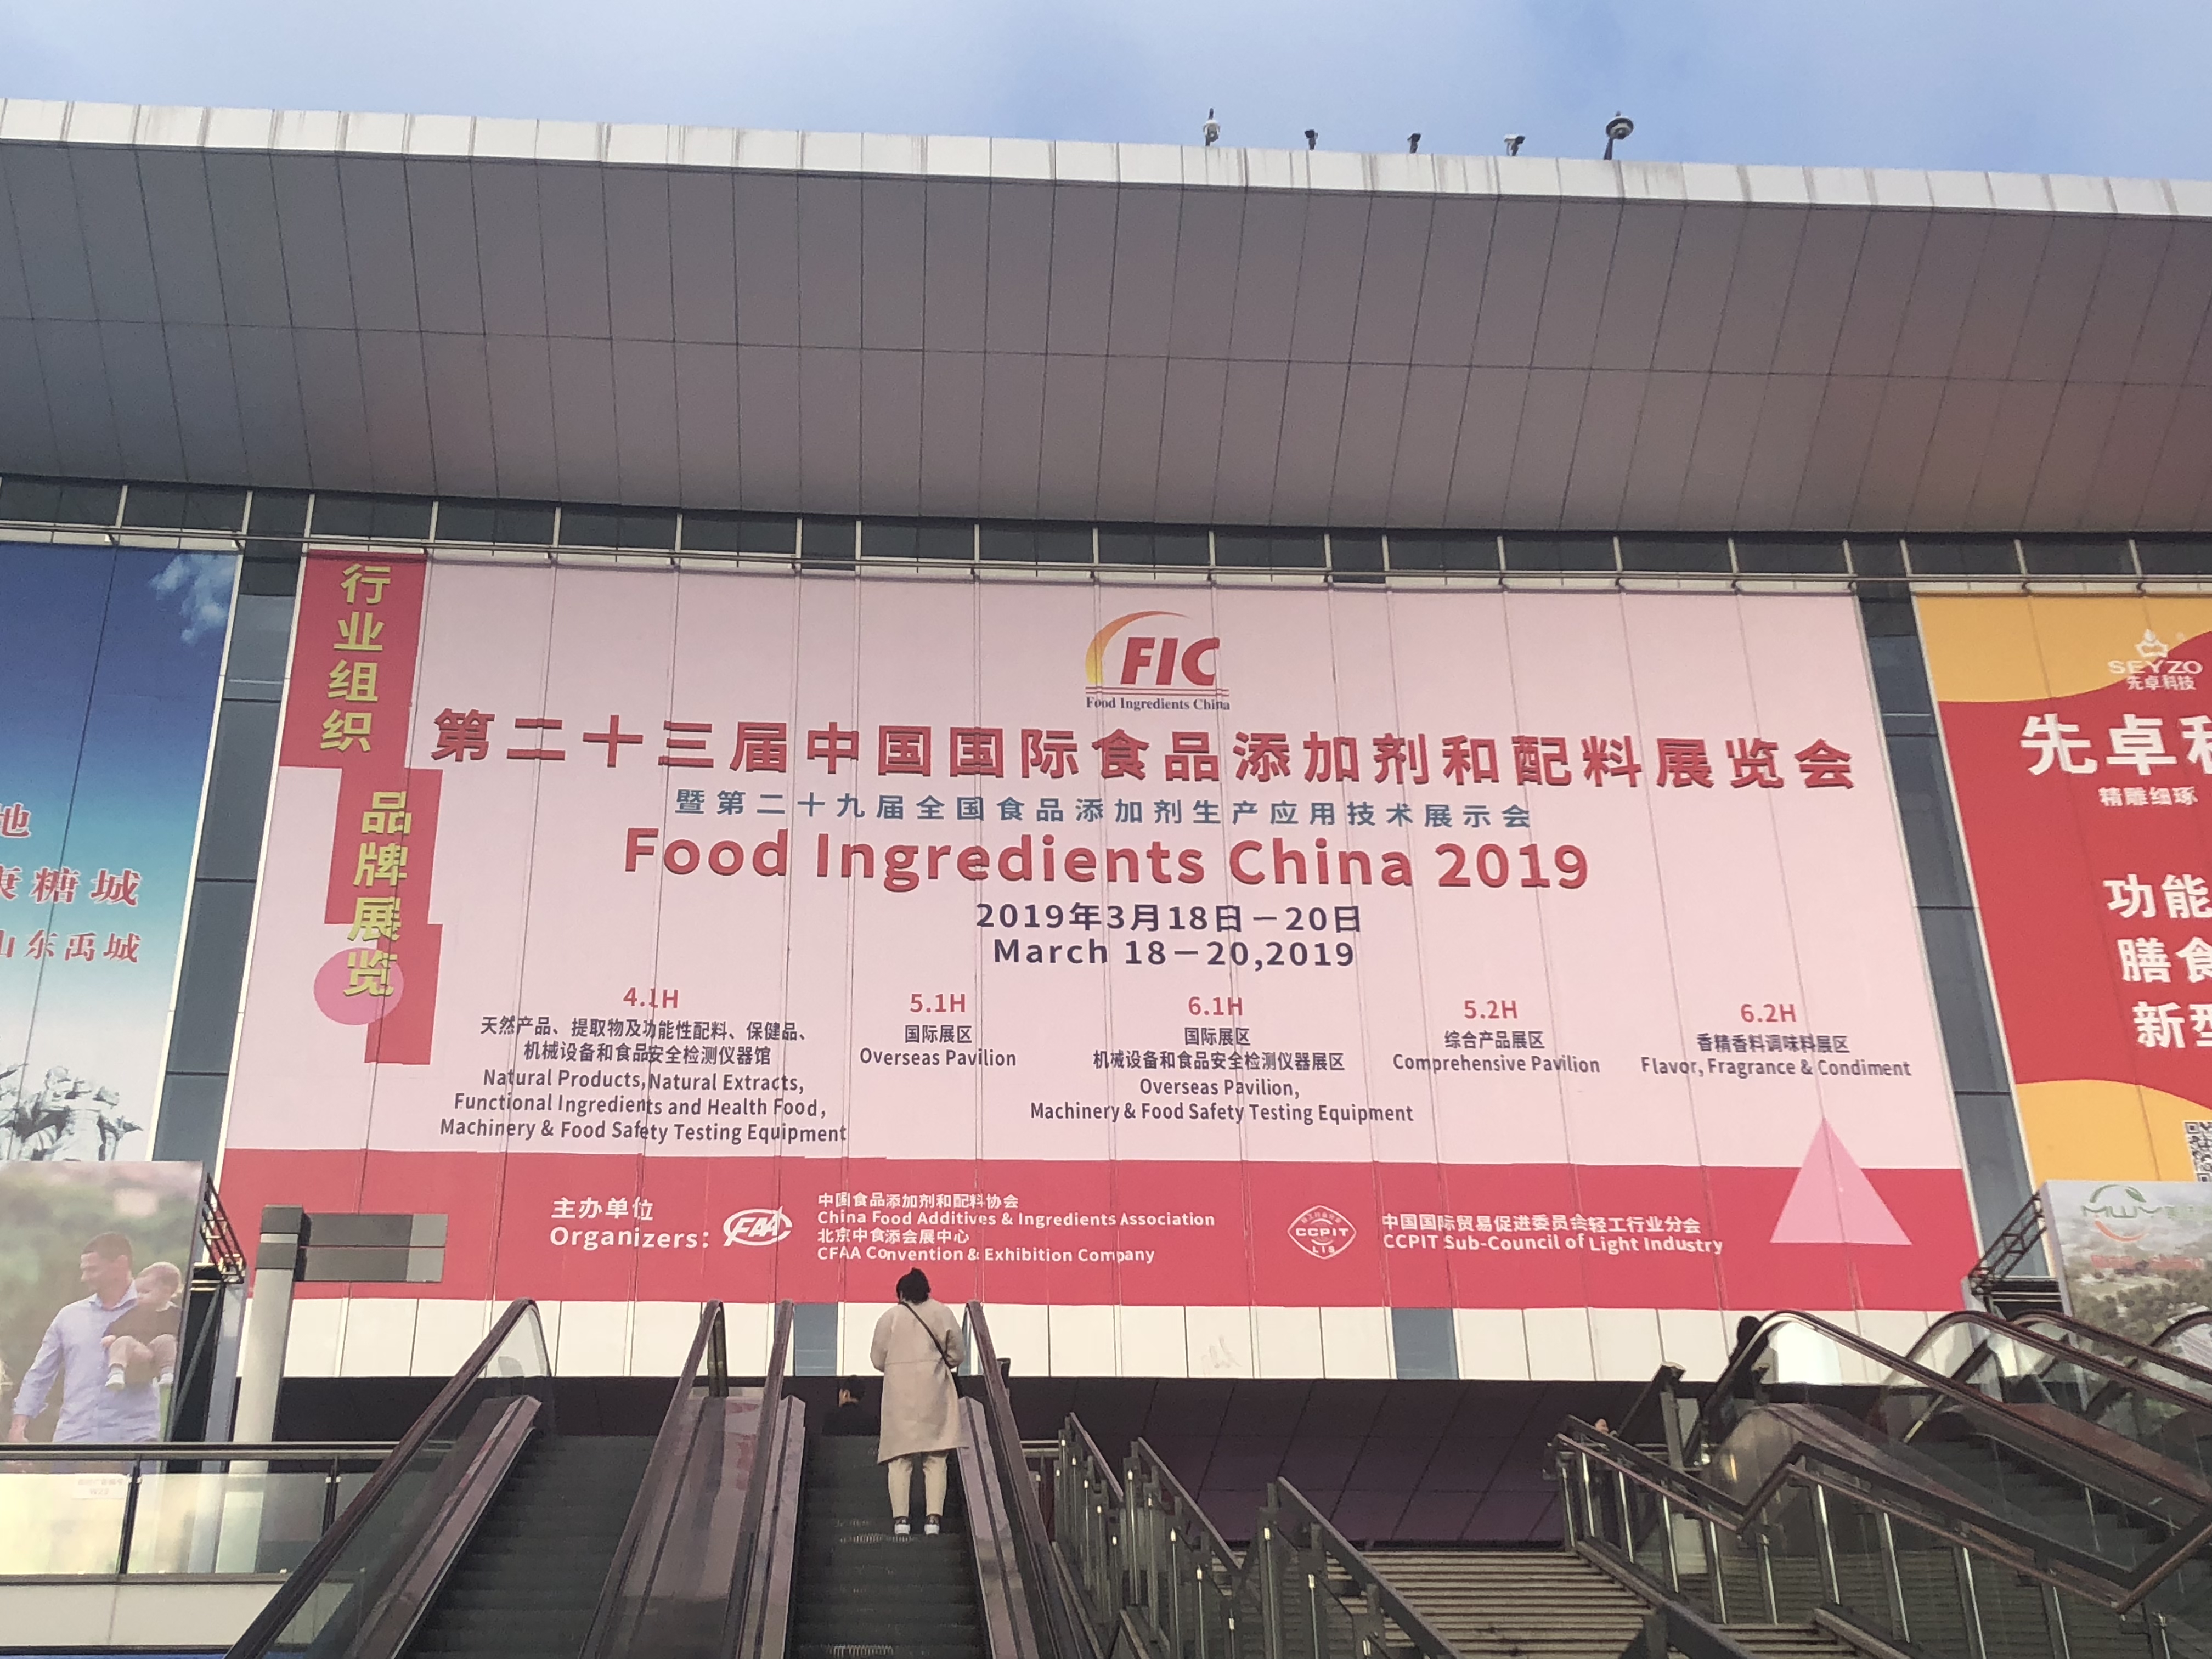 Food Ingredients China (FIC) 2019